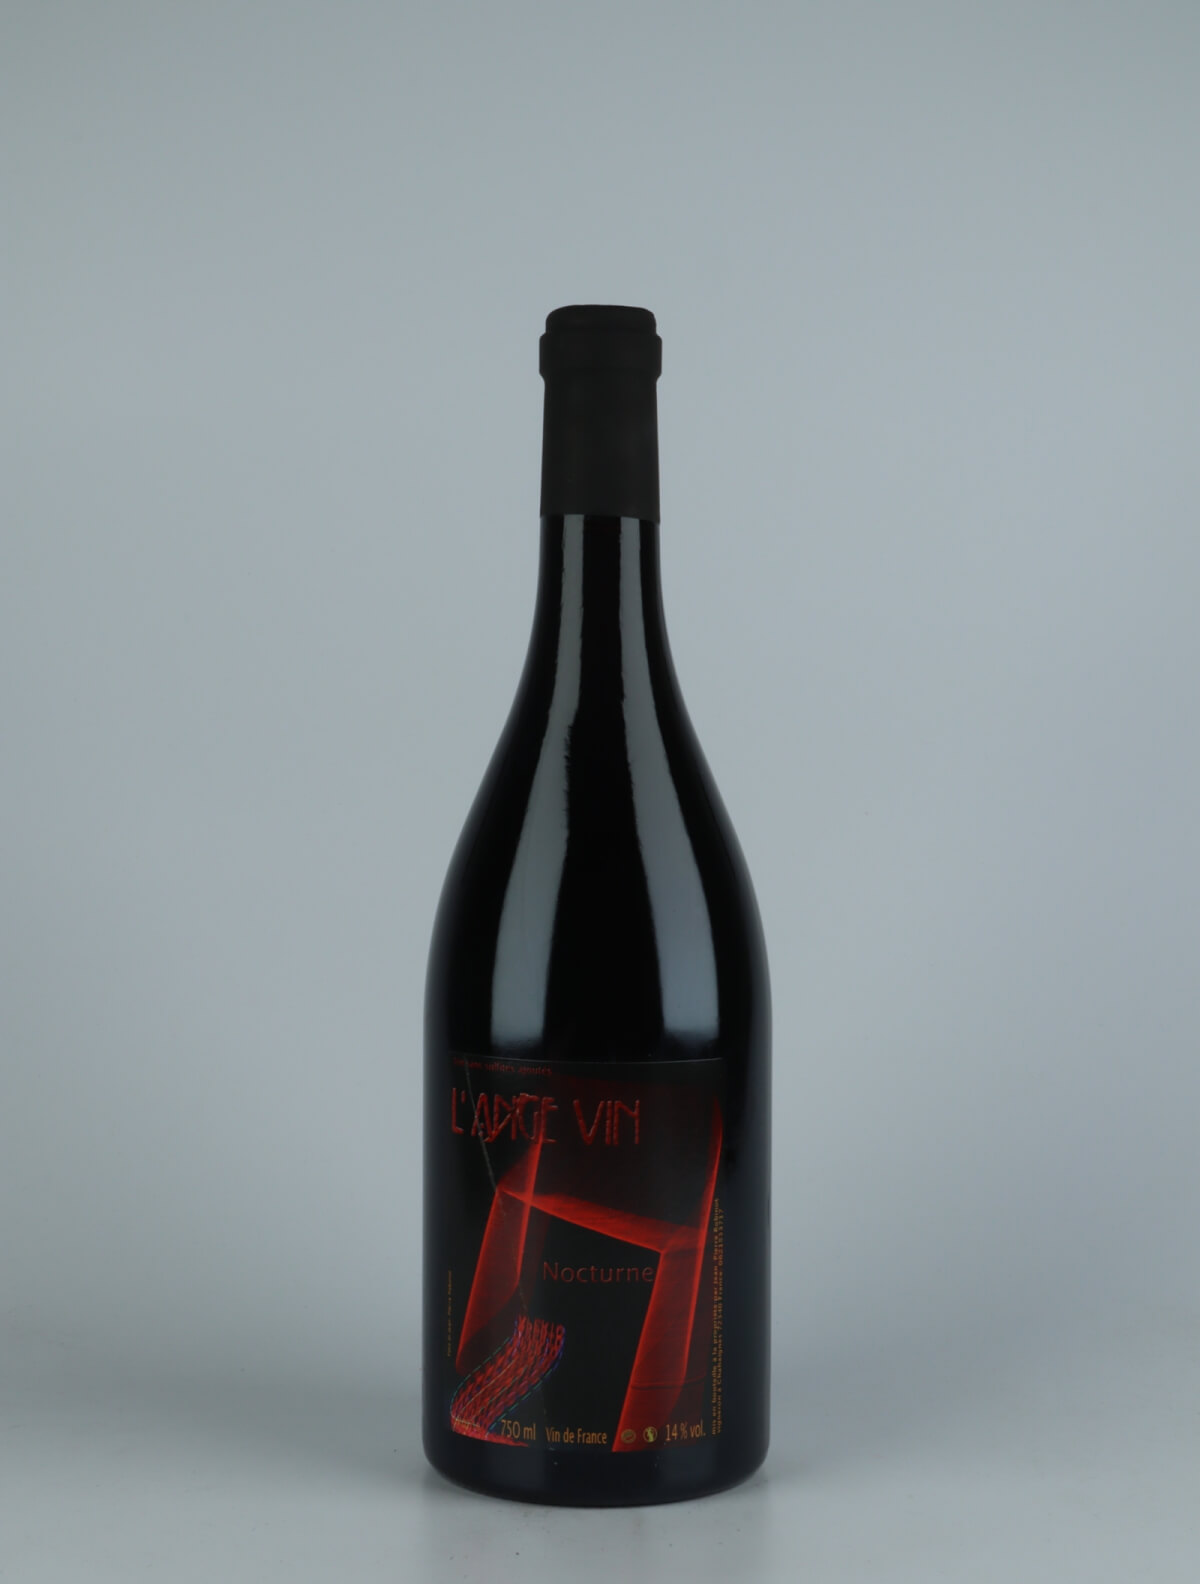 A bottle 2019 Nocturne Red wine from Jean-Pierre Robinot, Loire in France